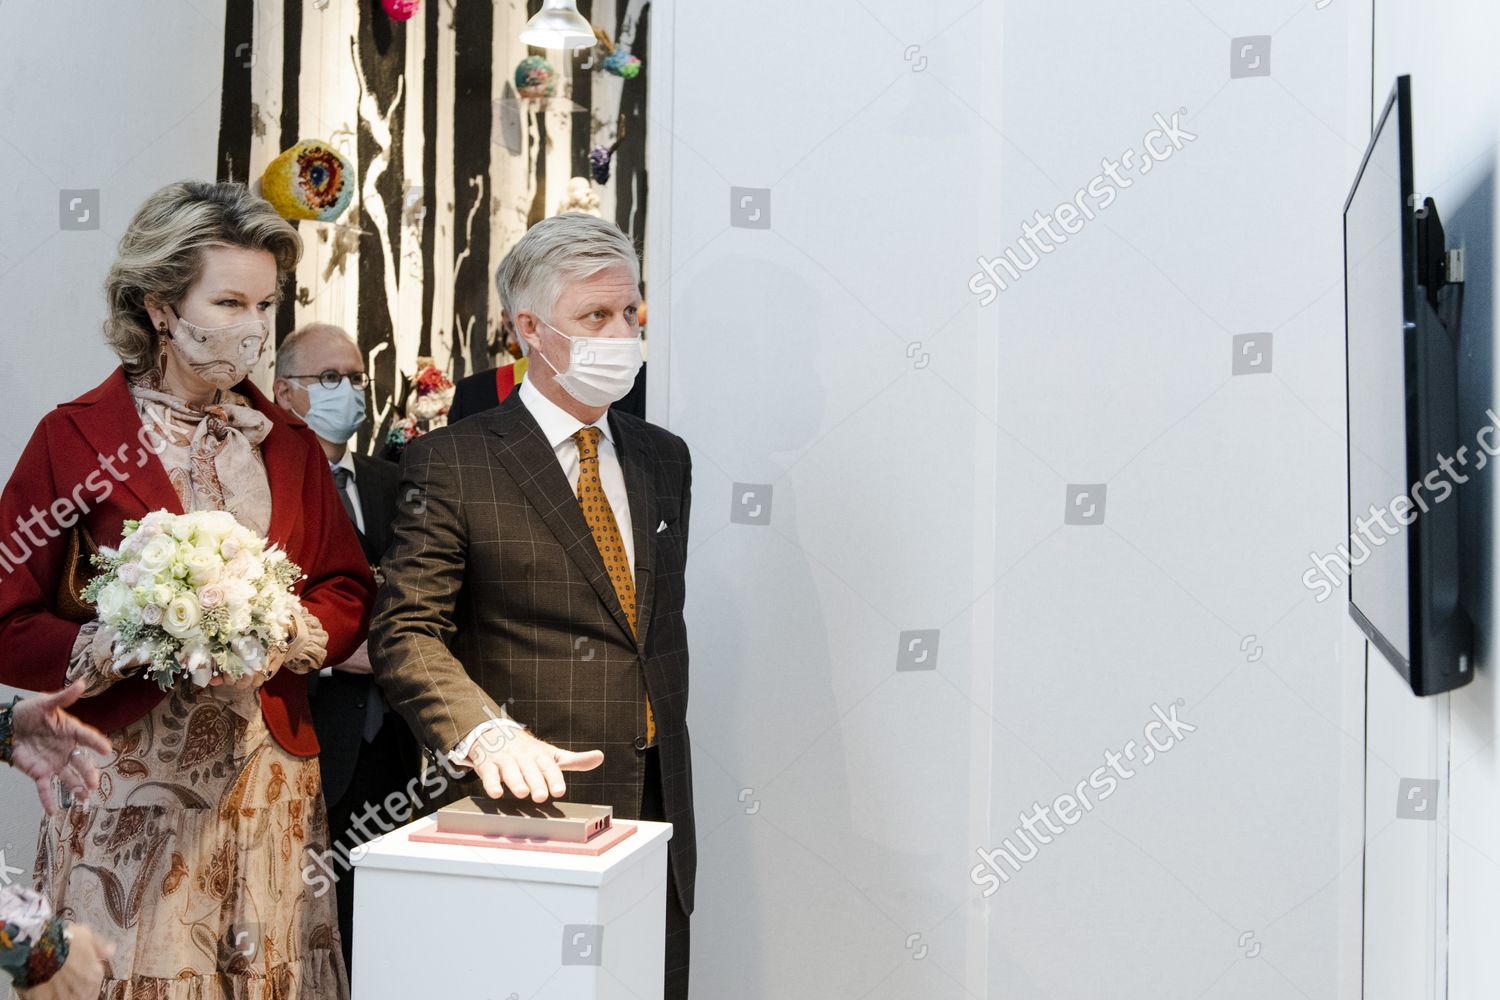 royals-visit-luxembourg-province-vielsalm-belgium-shutterstock-editorial-12529498i.jpg